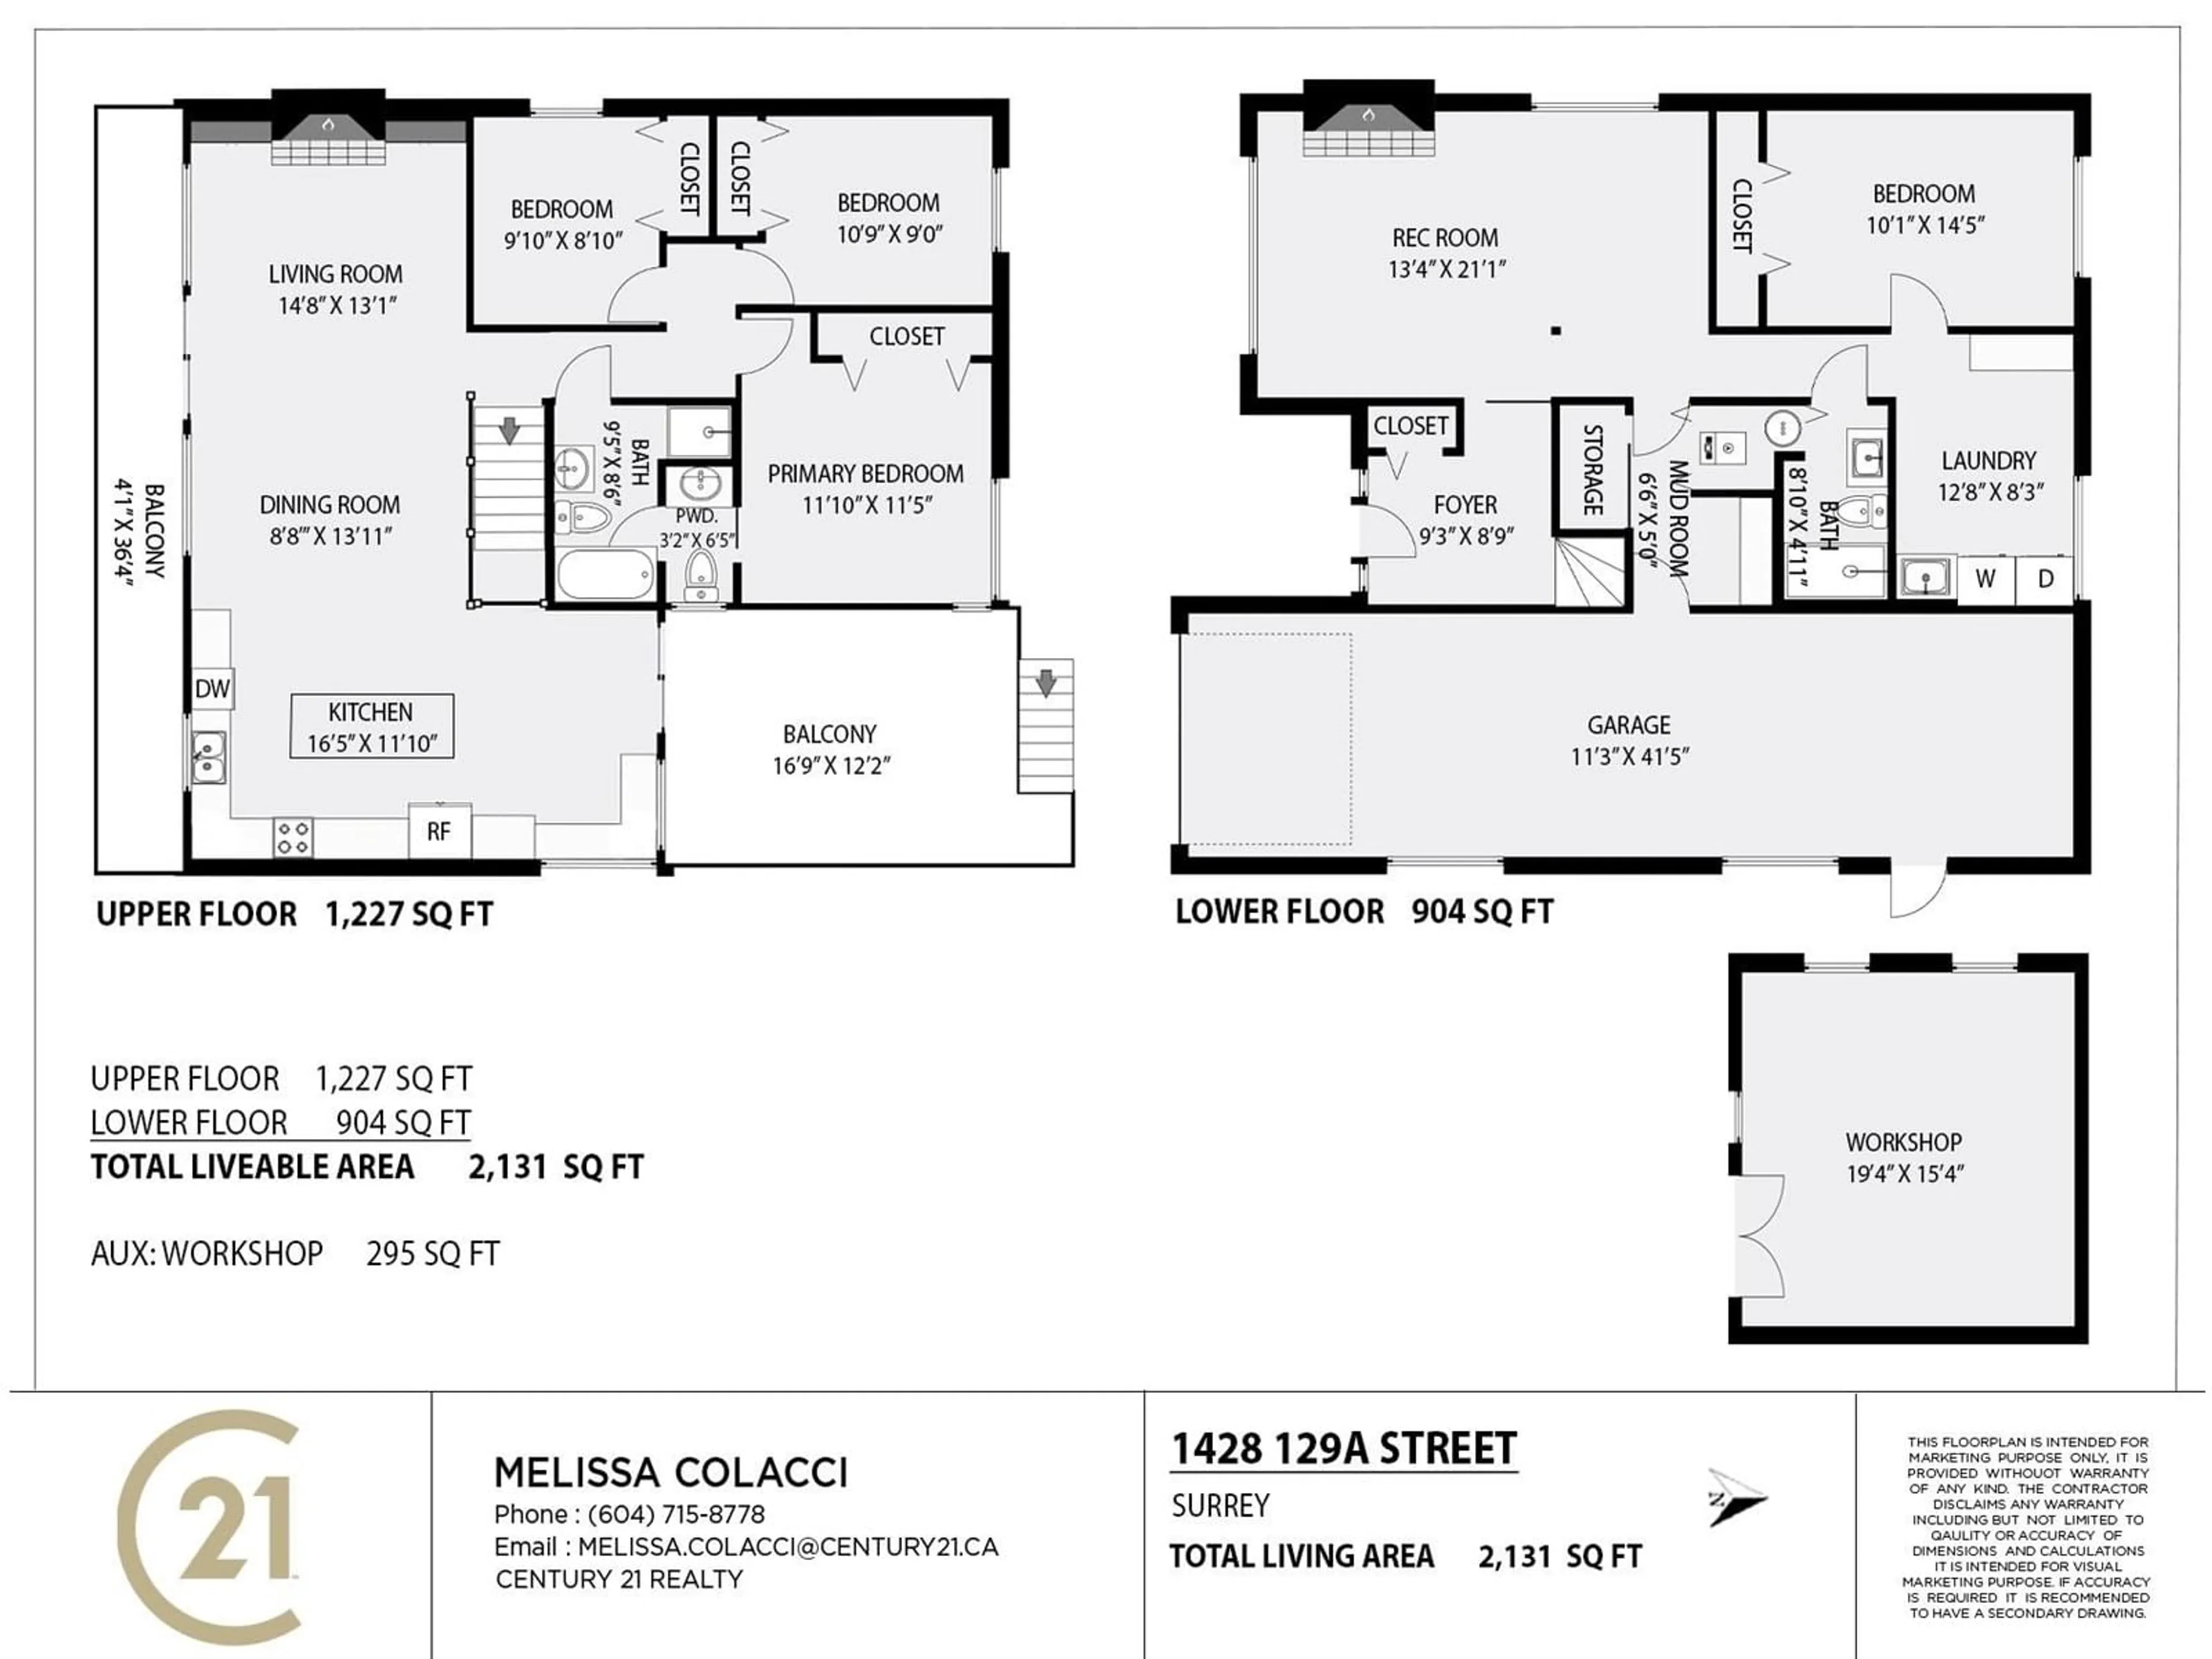 Floor plan for 1428 129A STREET, Surrey British Columbia V4A3Y7